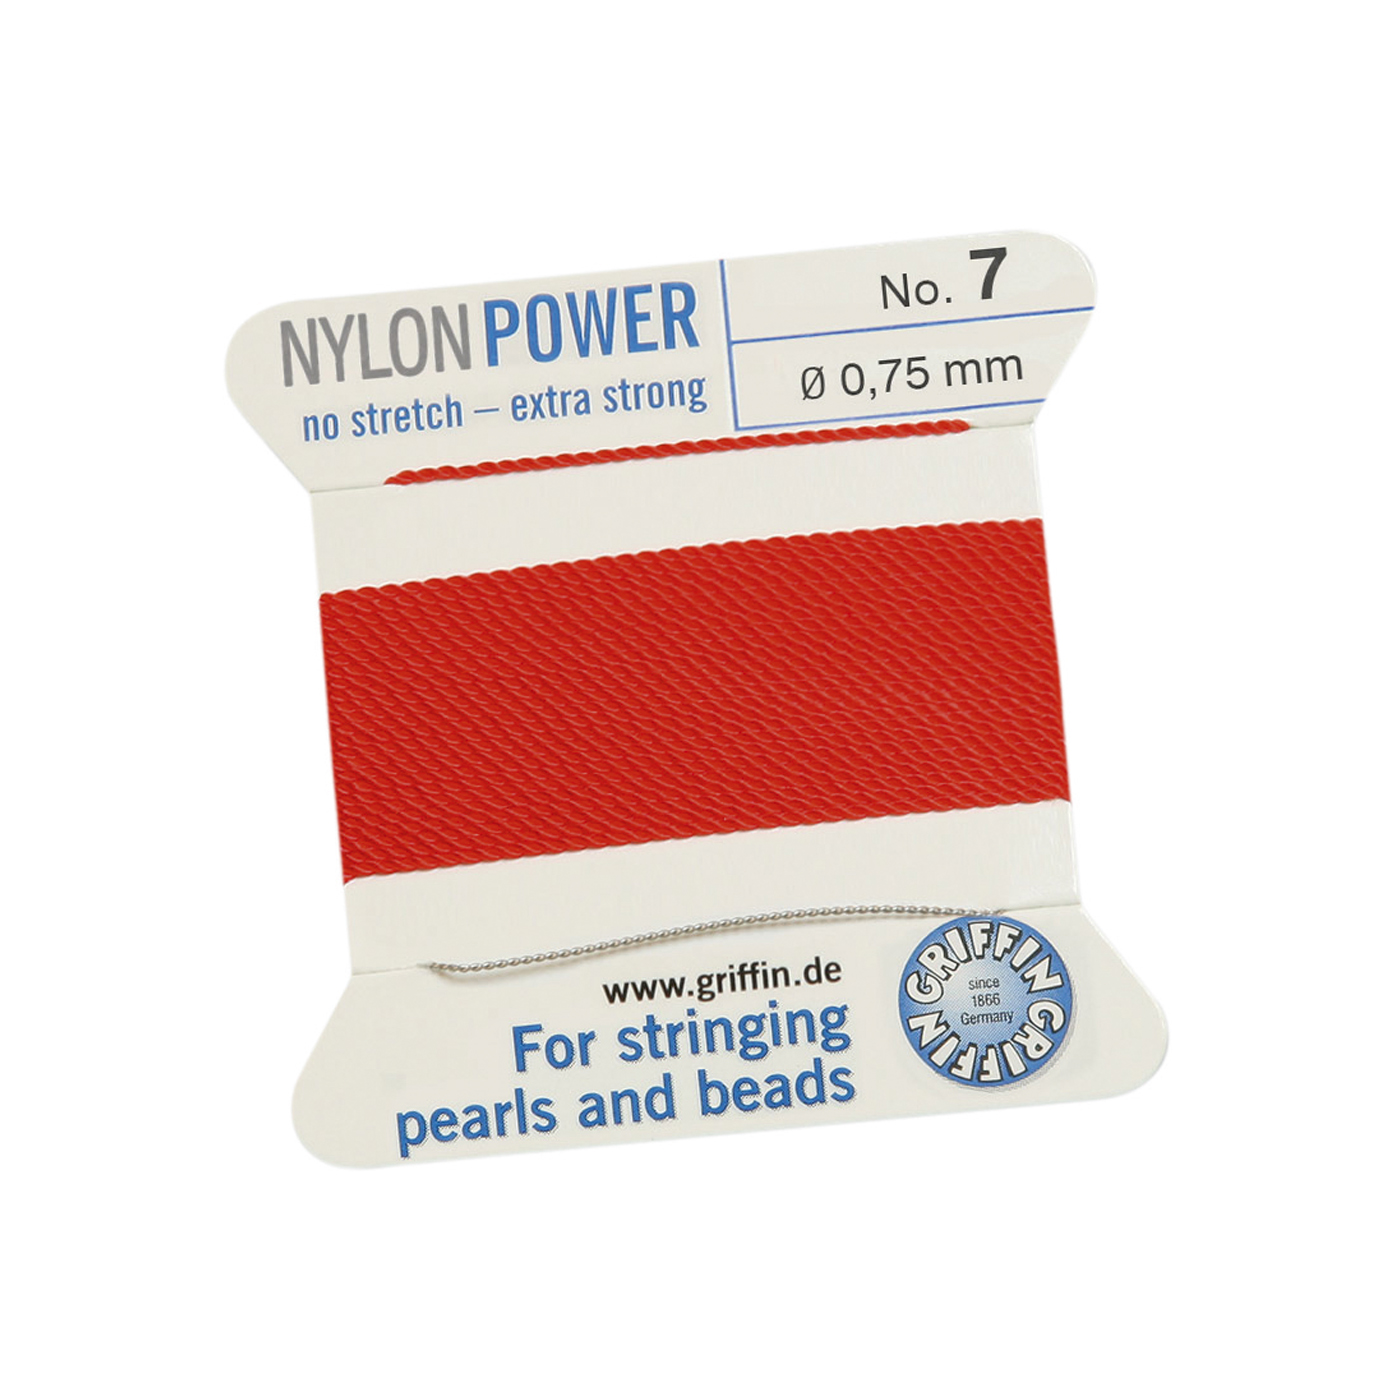 Bead Cord NylonPower, Red, No. 7 - 2 m